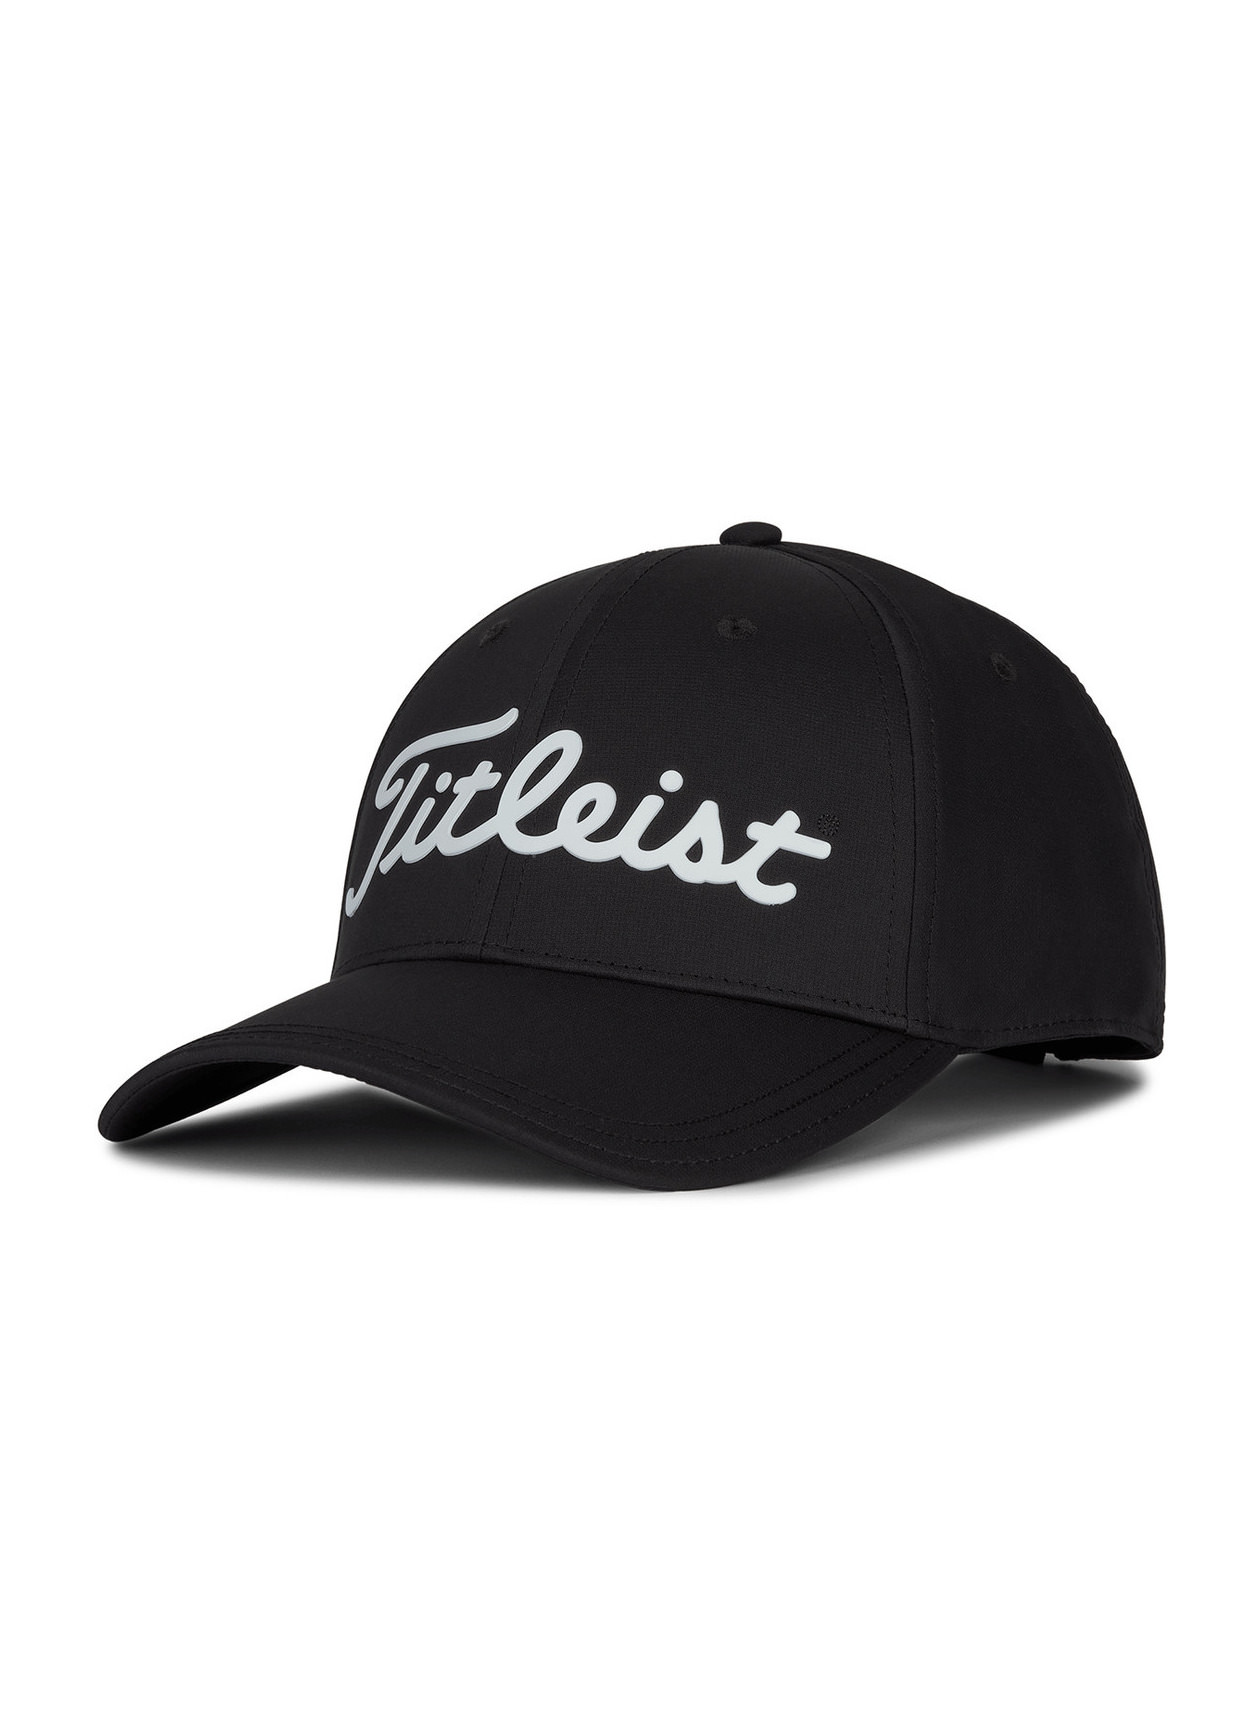 Titleist Black / White Players Performance Ball Marker Golf Hat